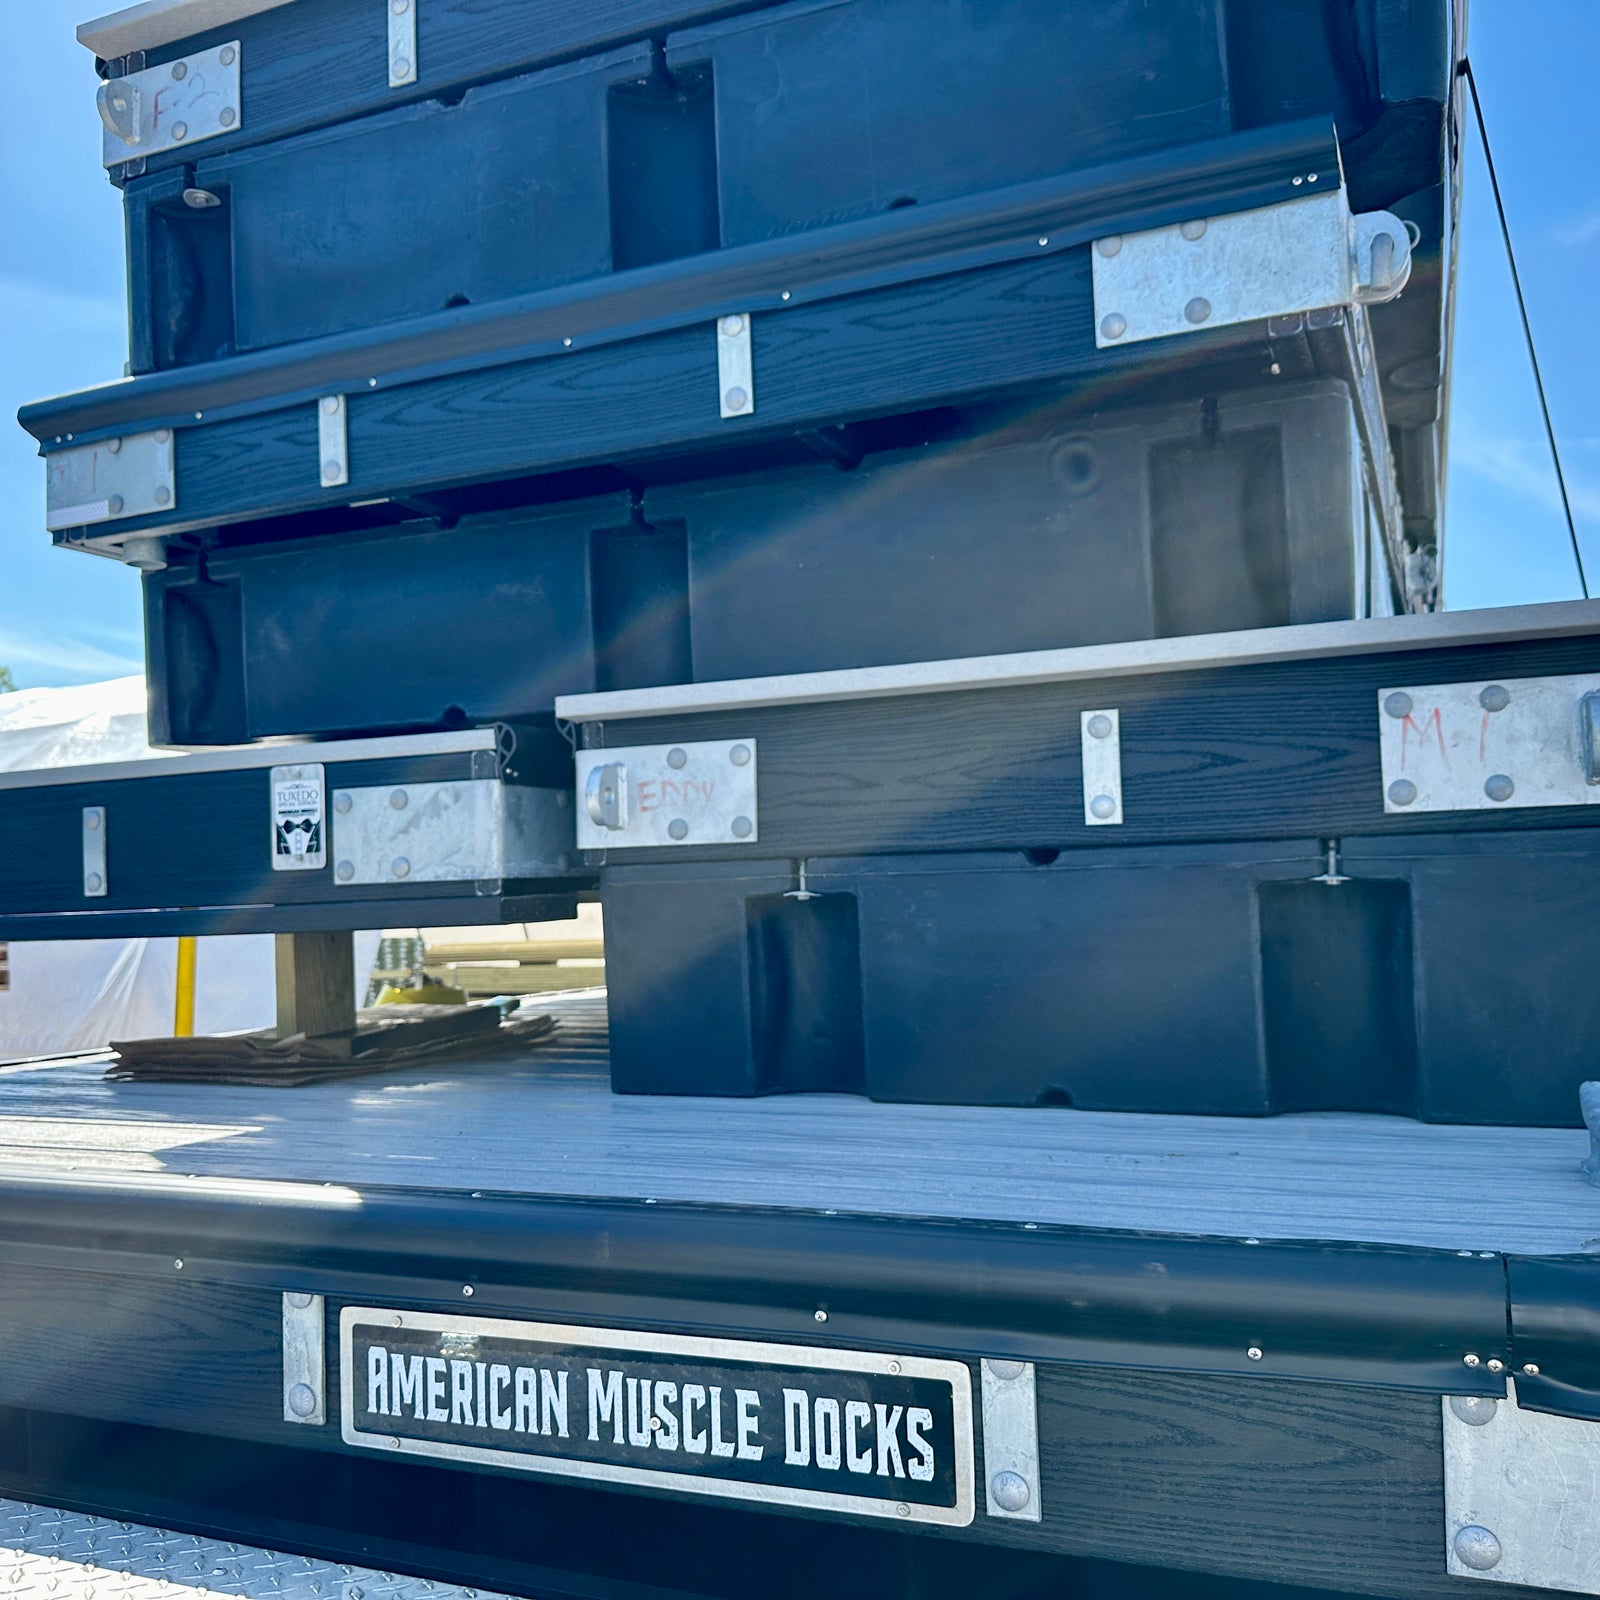 Composite reinforced polymeric boat dock frame